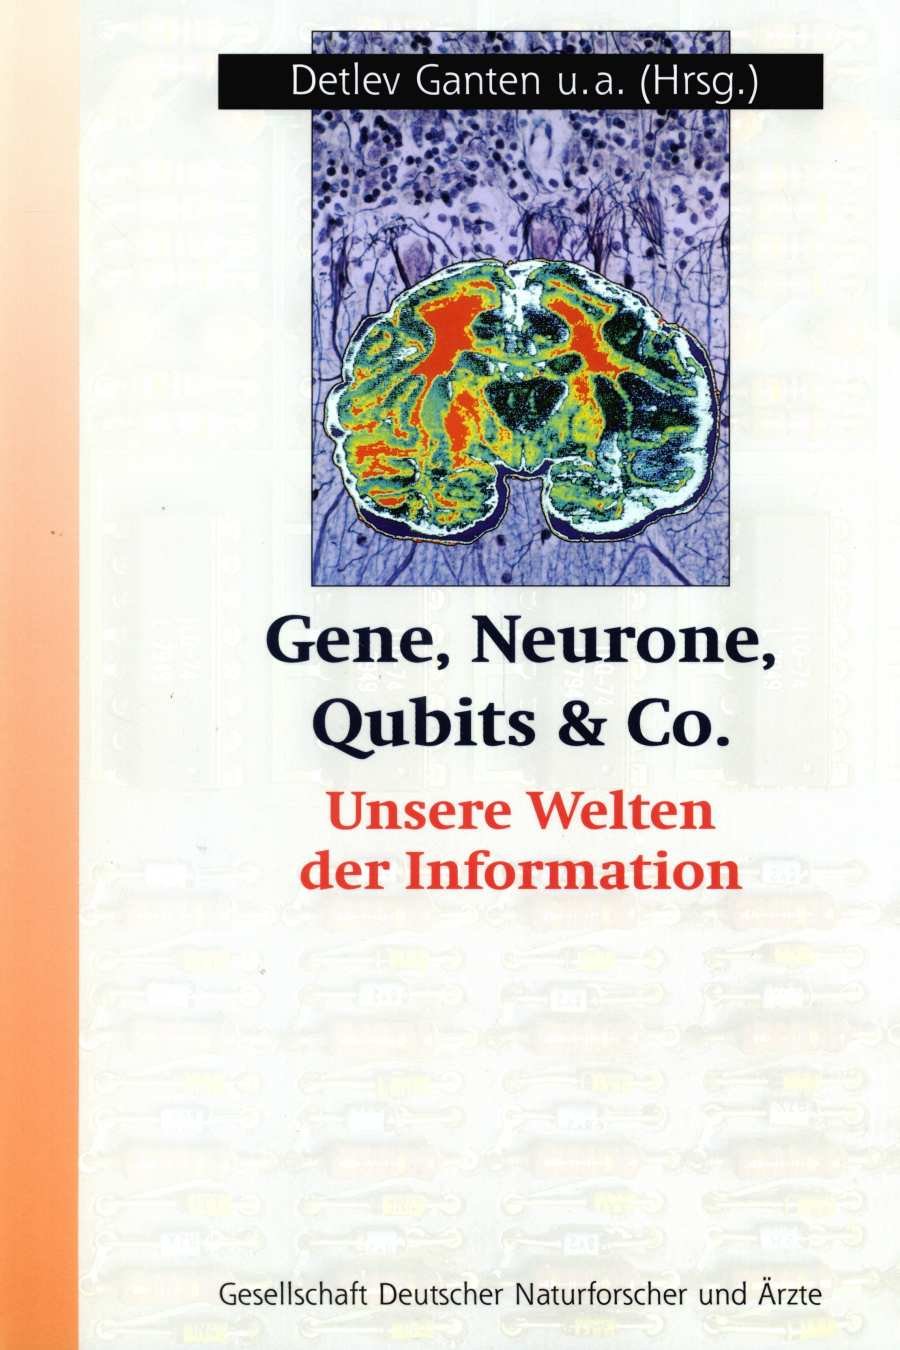 Gene, Neurone, Qubits & Co.